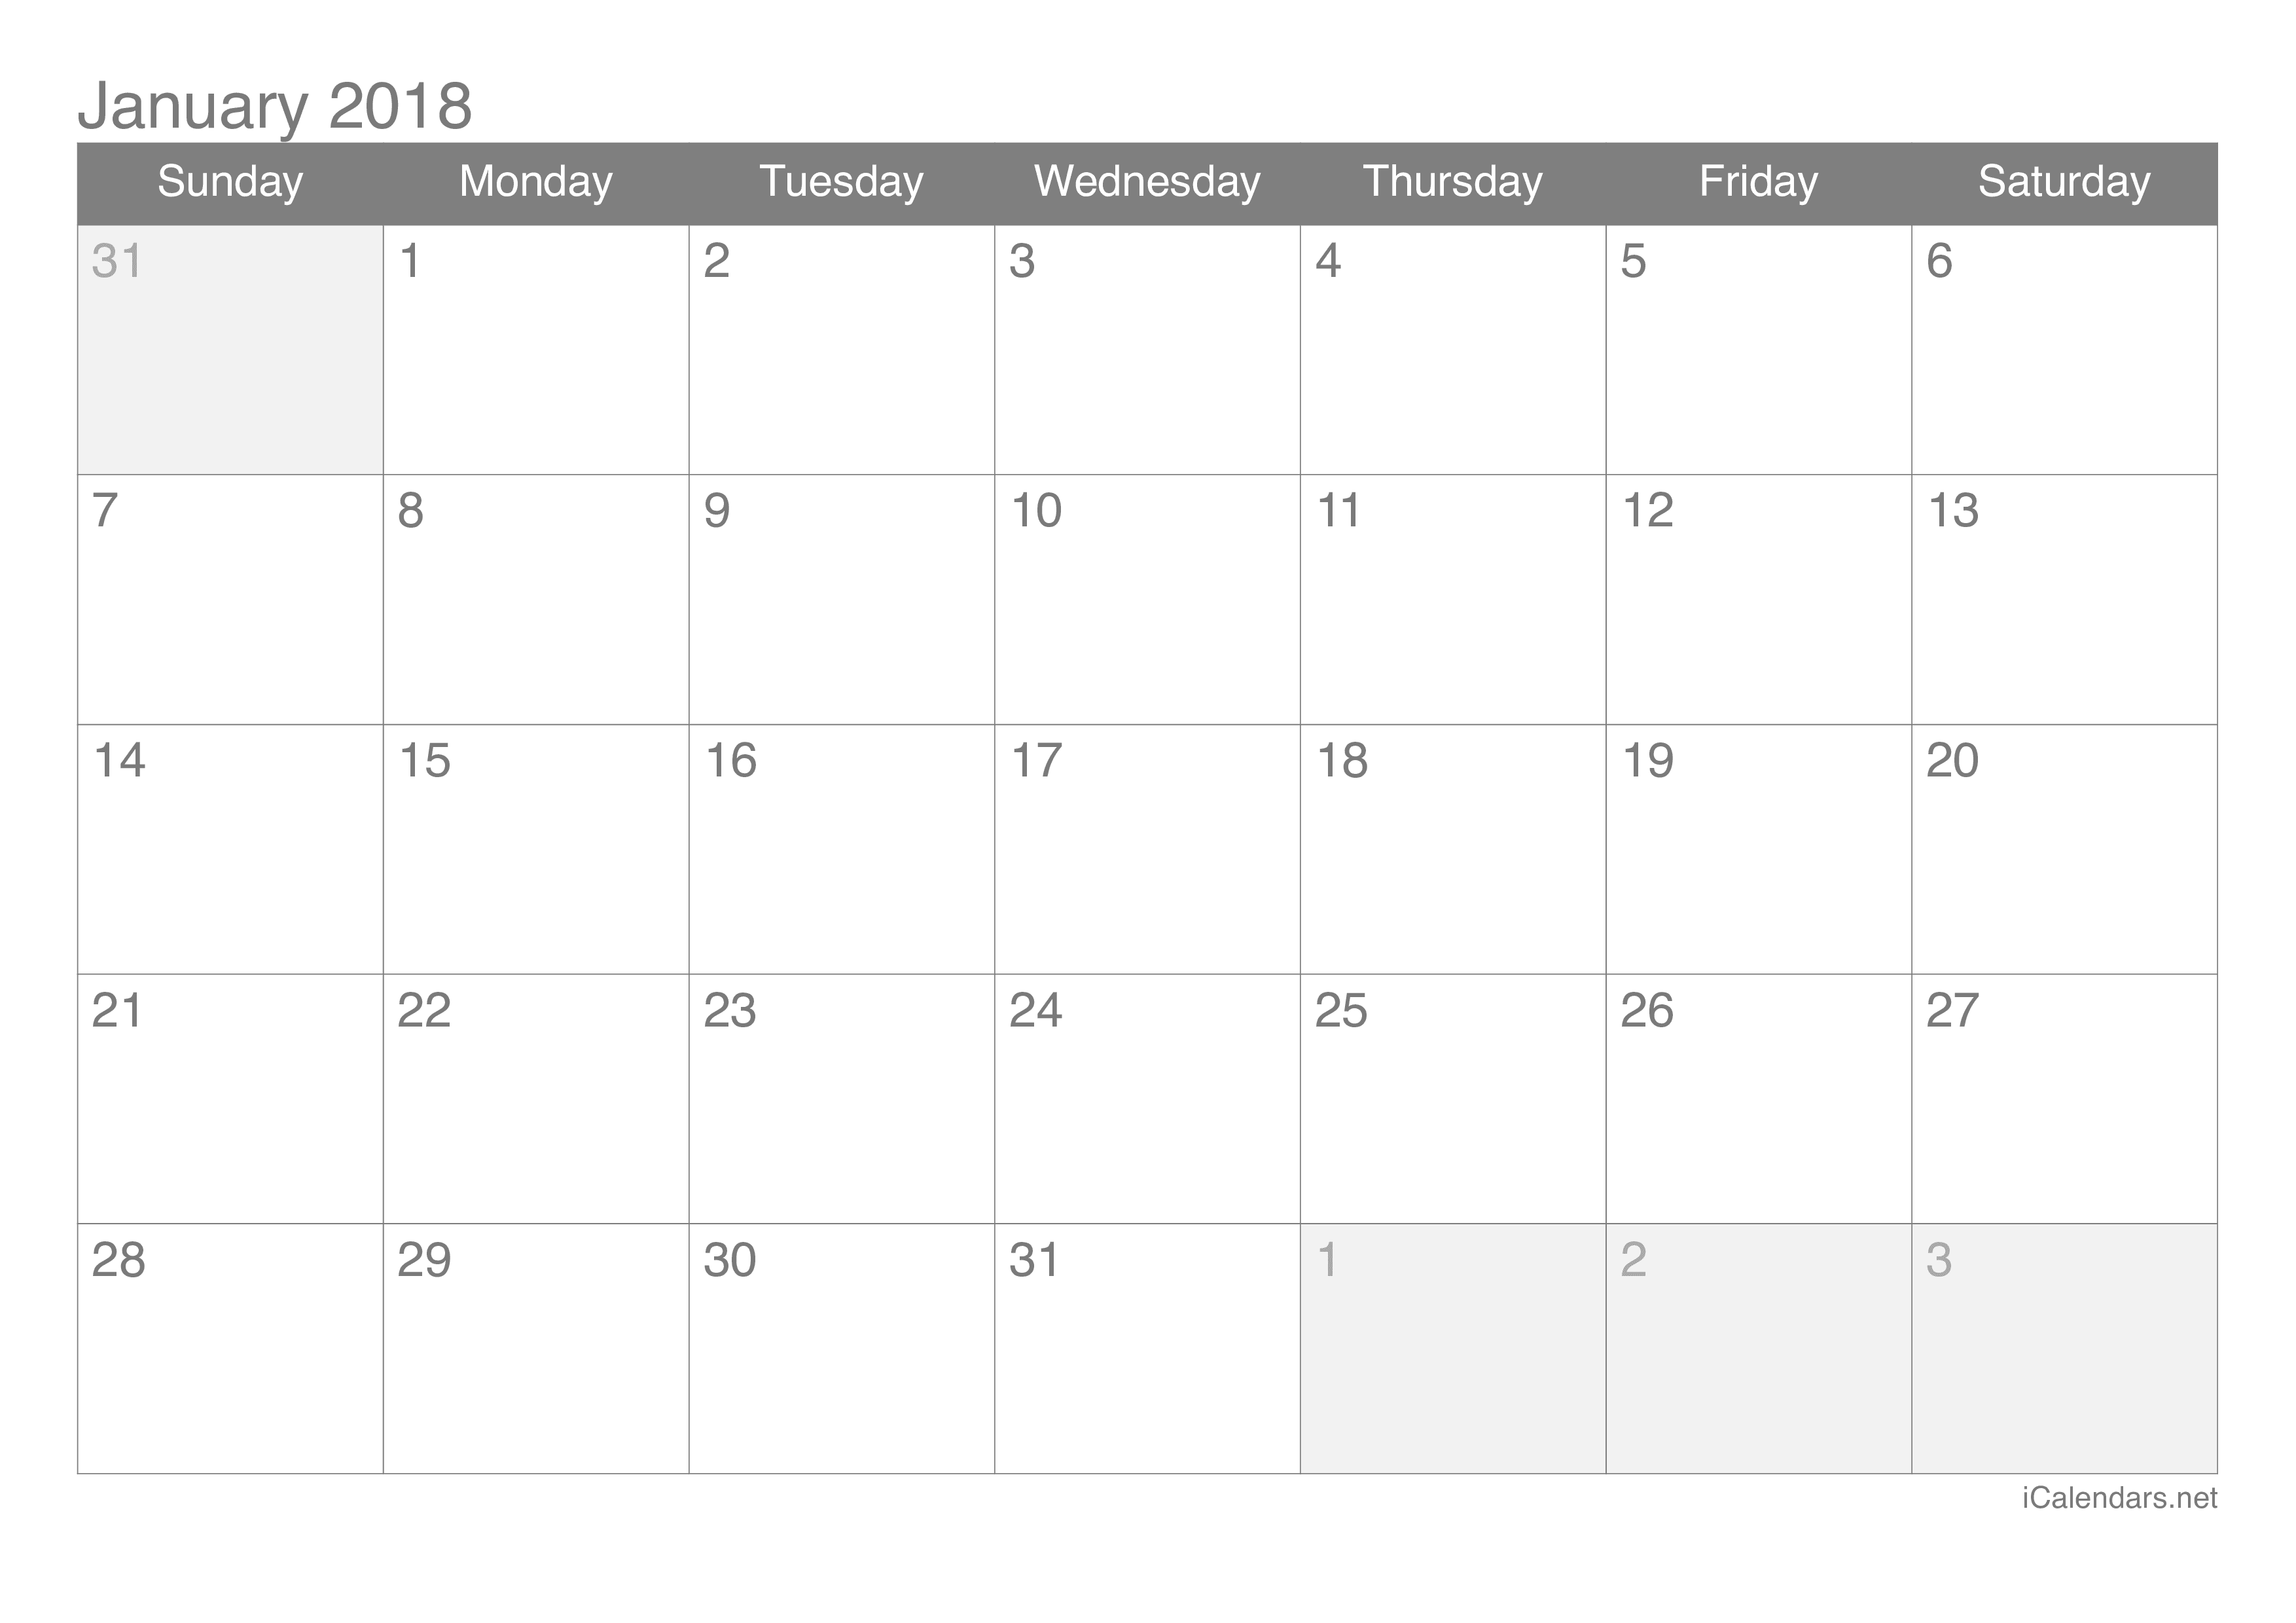 January 2018 Printable Calendar icalendars net